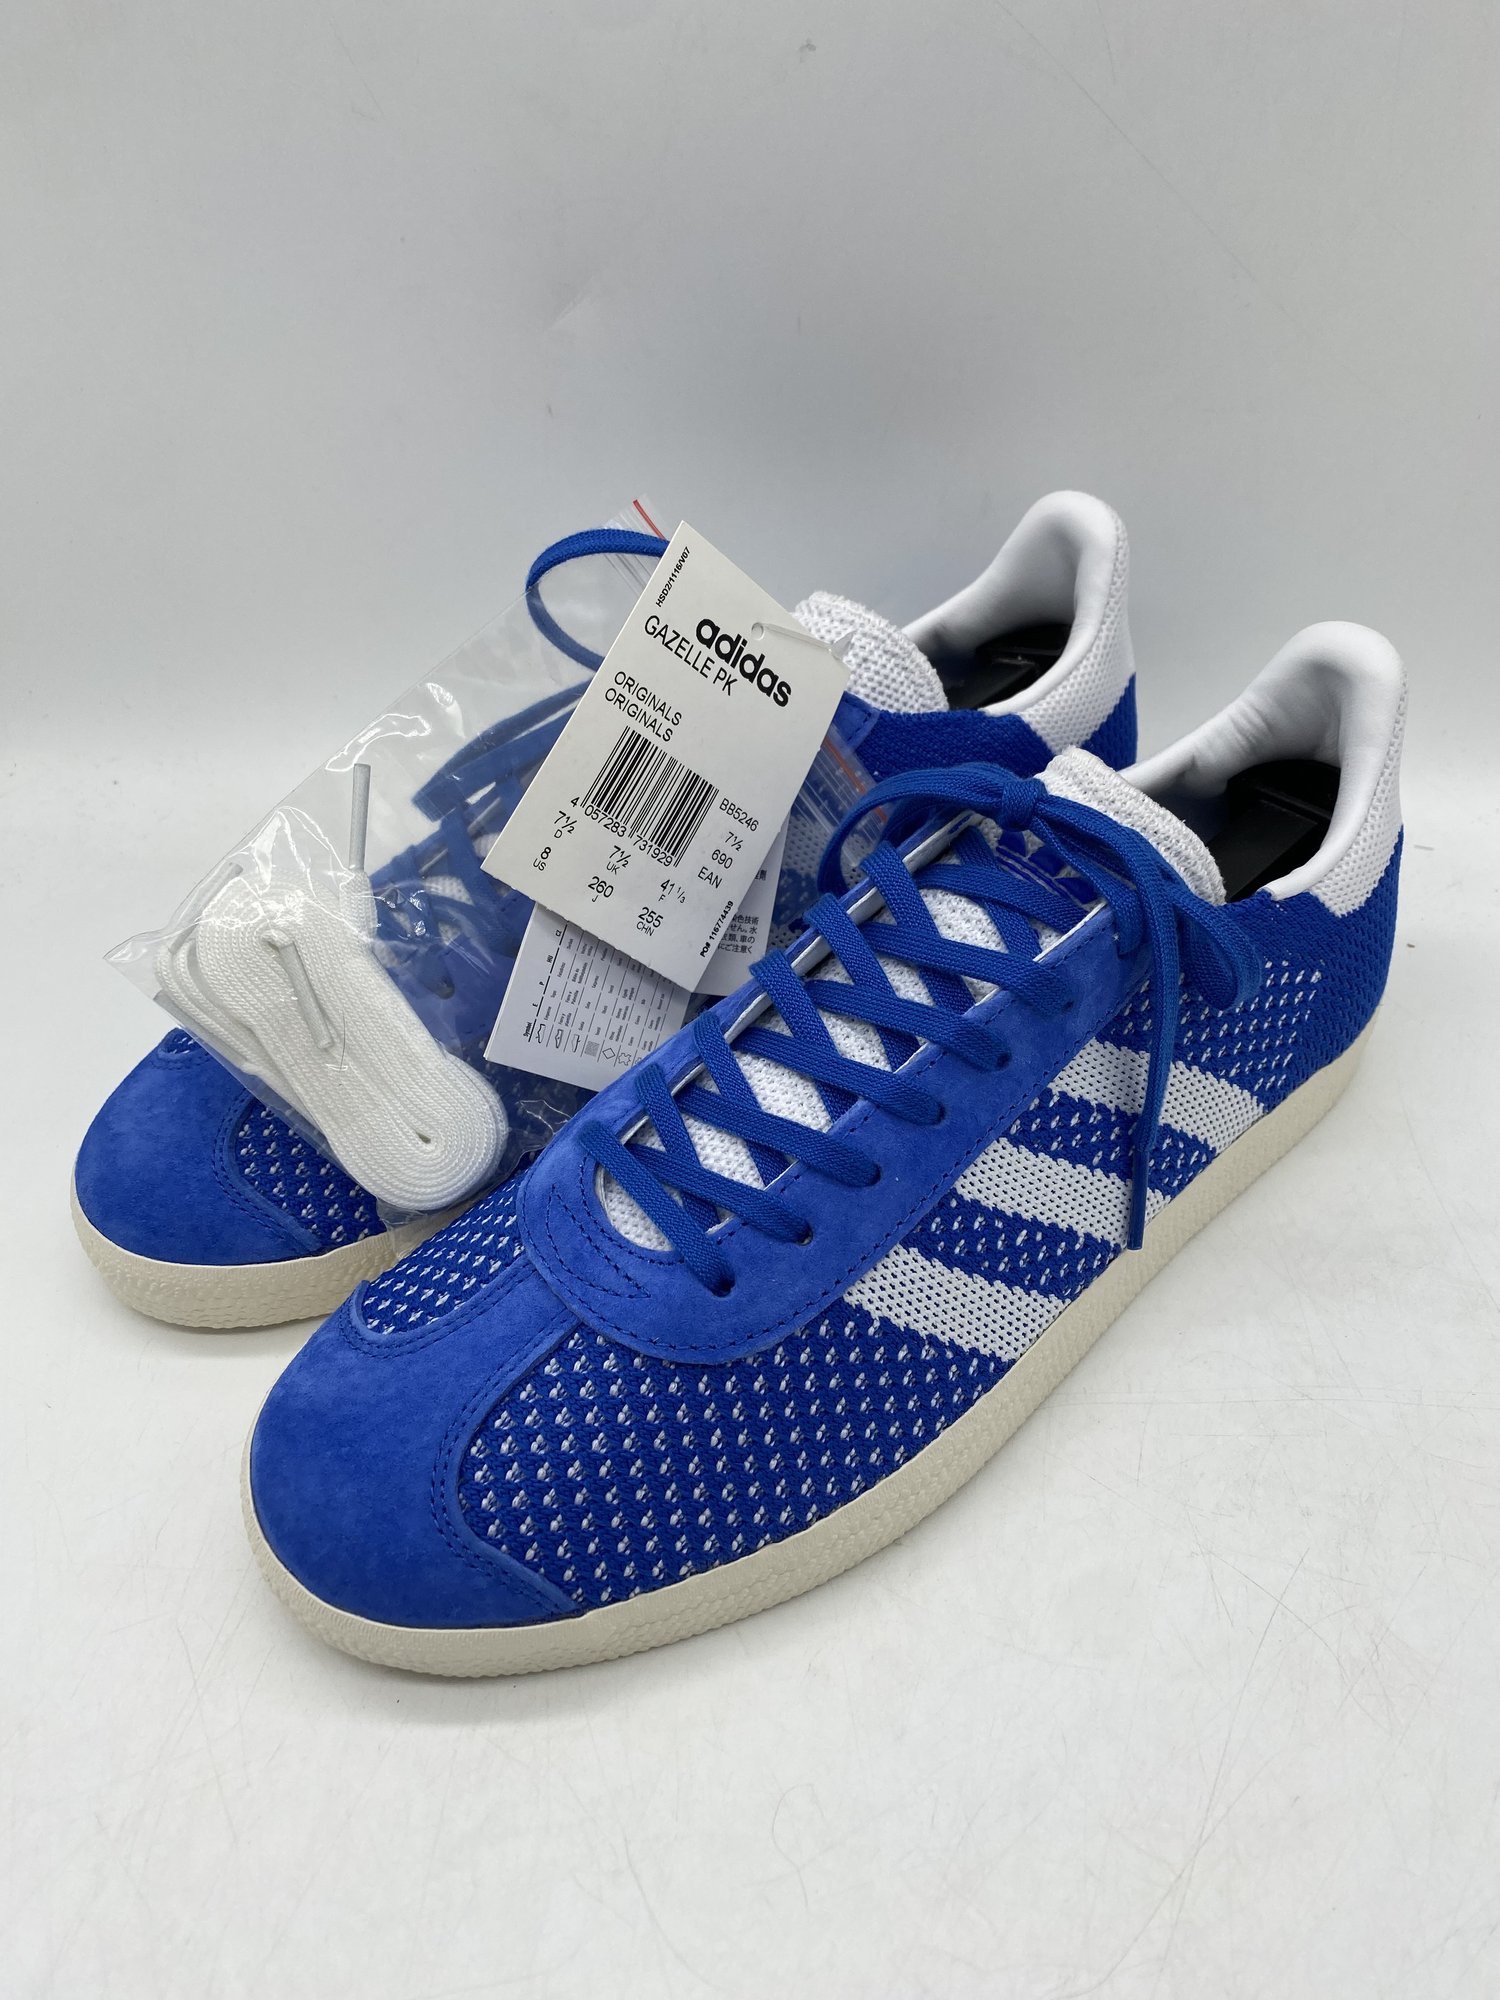 Nathaniel Ward Perth Inspeccionar Adidas Gazelle Blue Knit Kegler Super- Size UK 7.5 — Stay Box Fresh